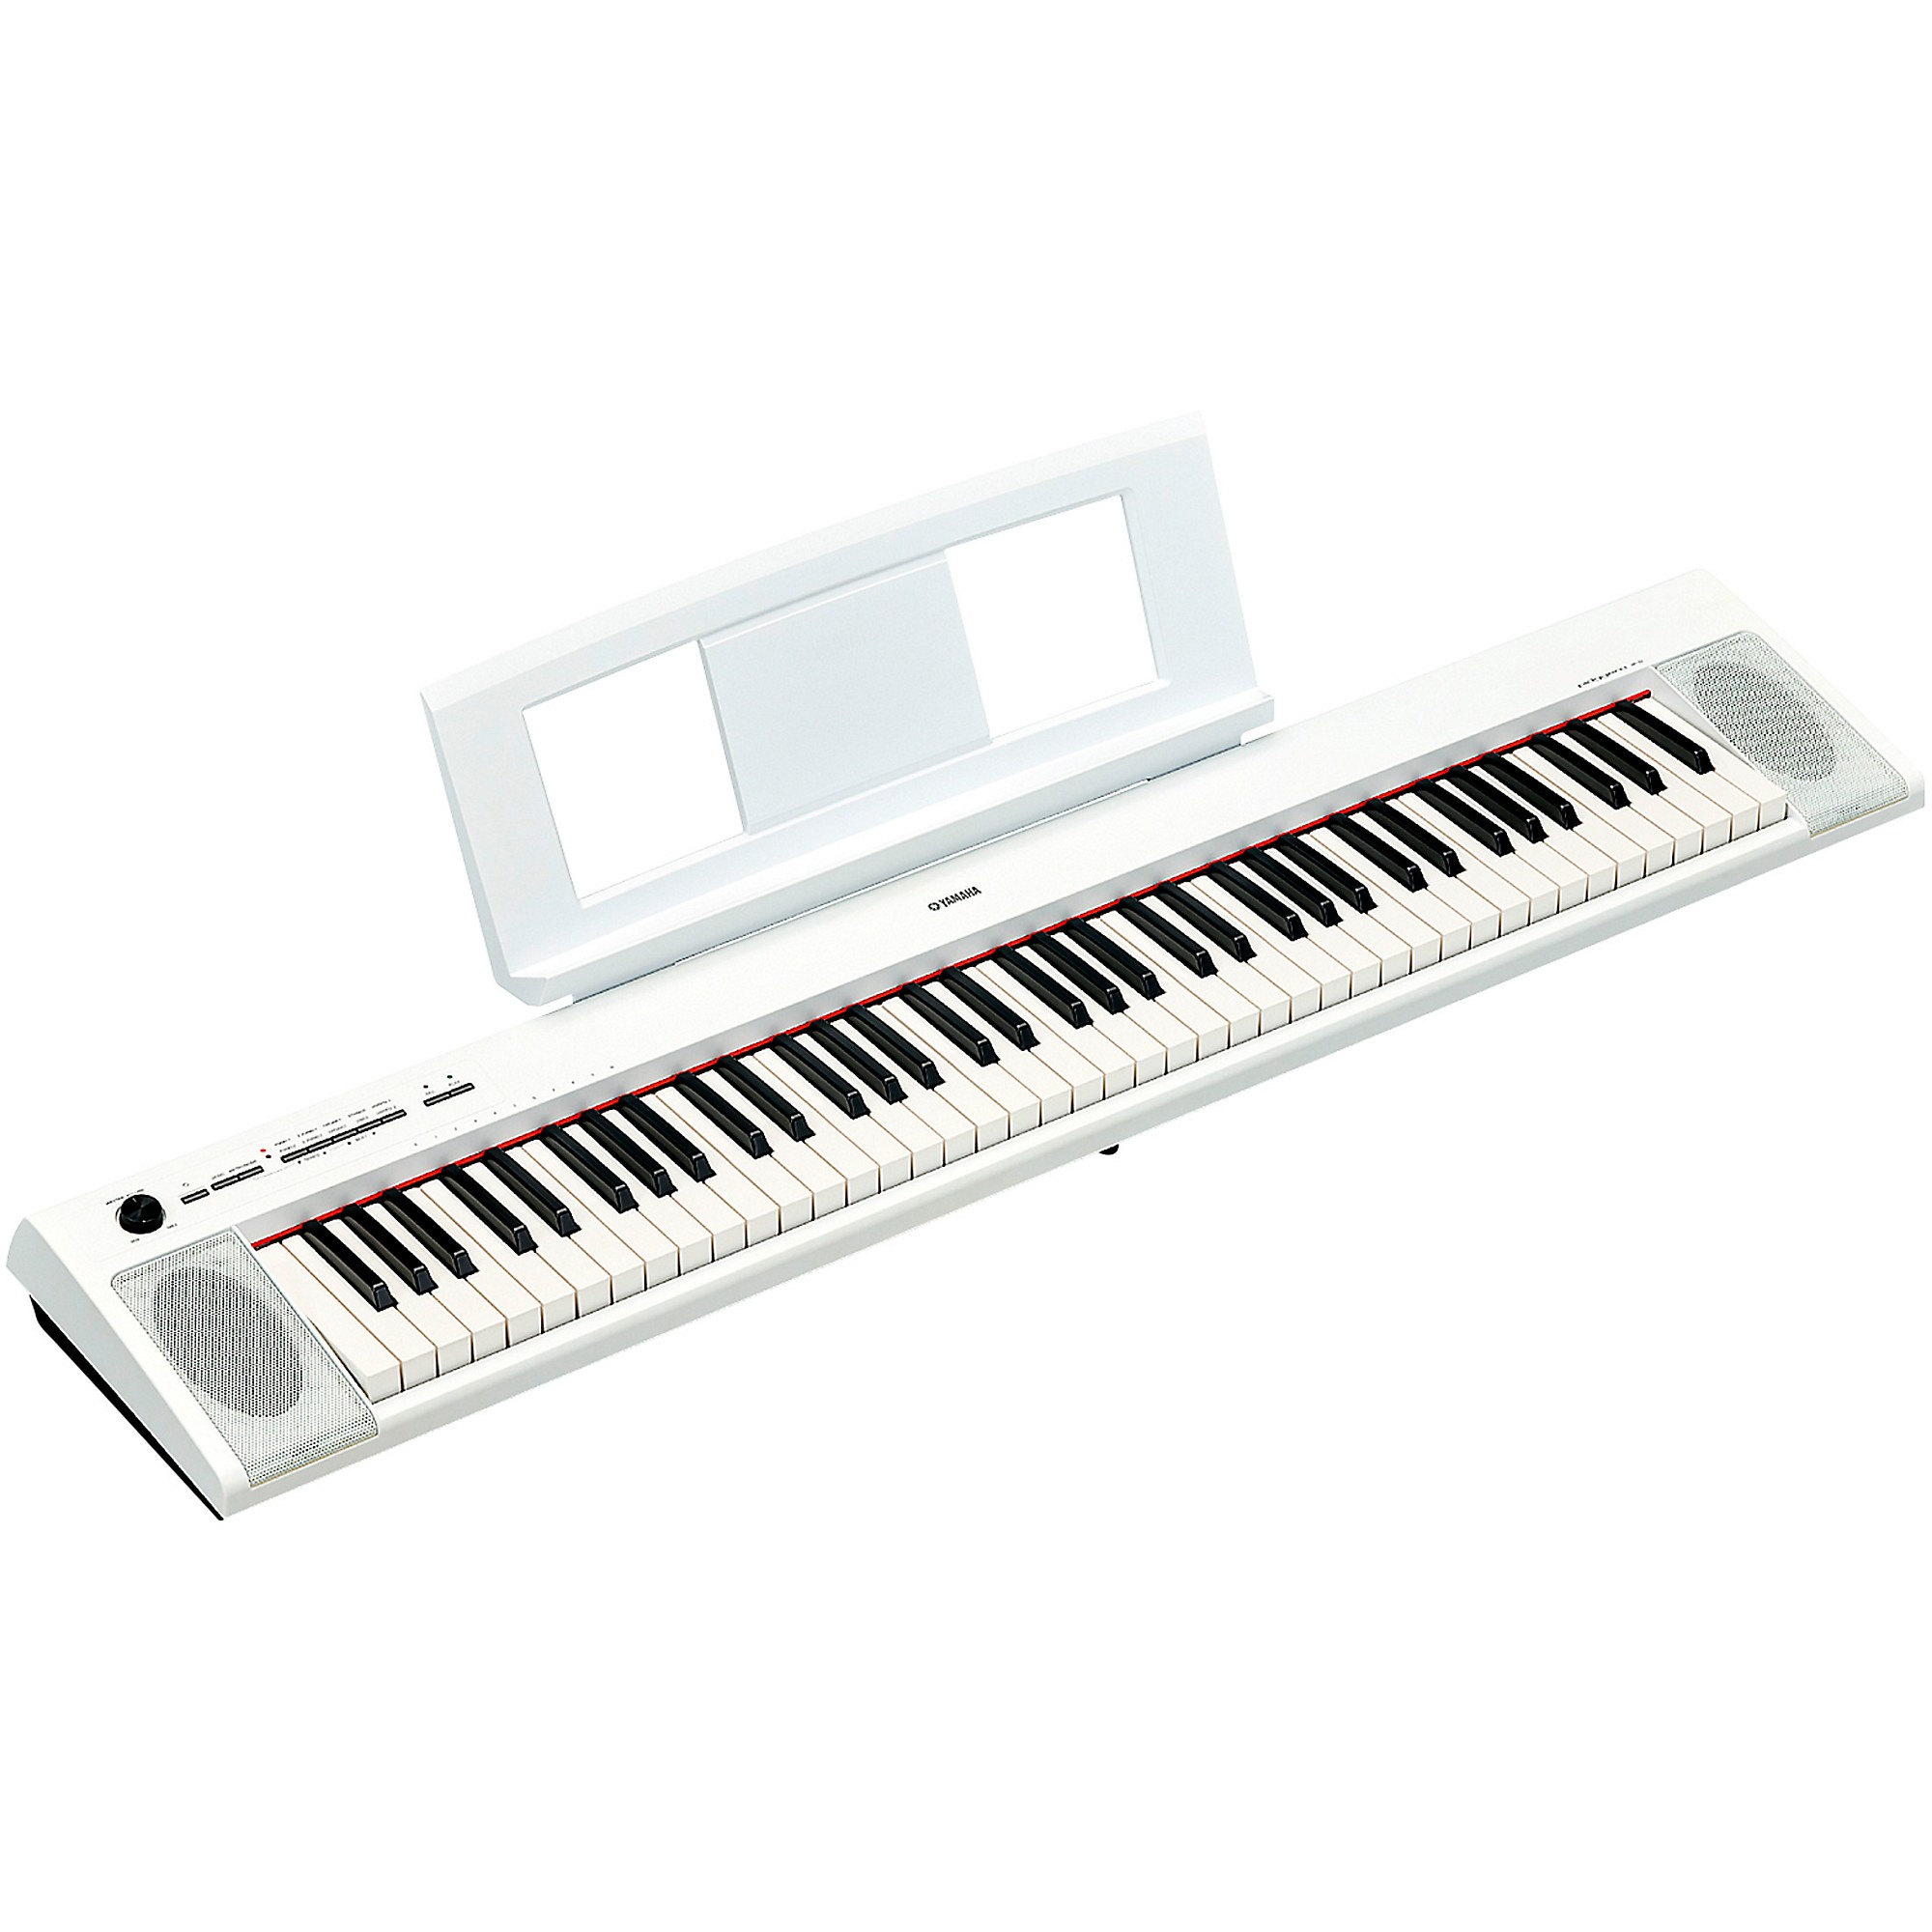 Yamaha Piaggero NP-32 76-Key Portable Keyboard With Power Adapter White